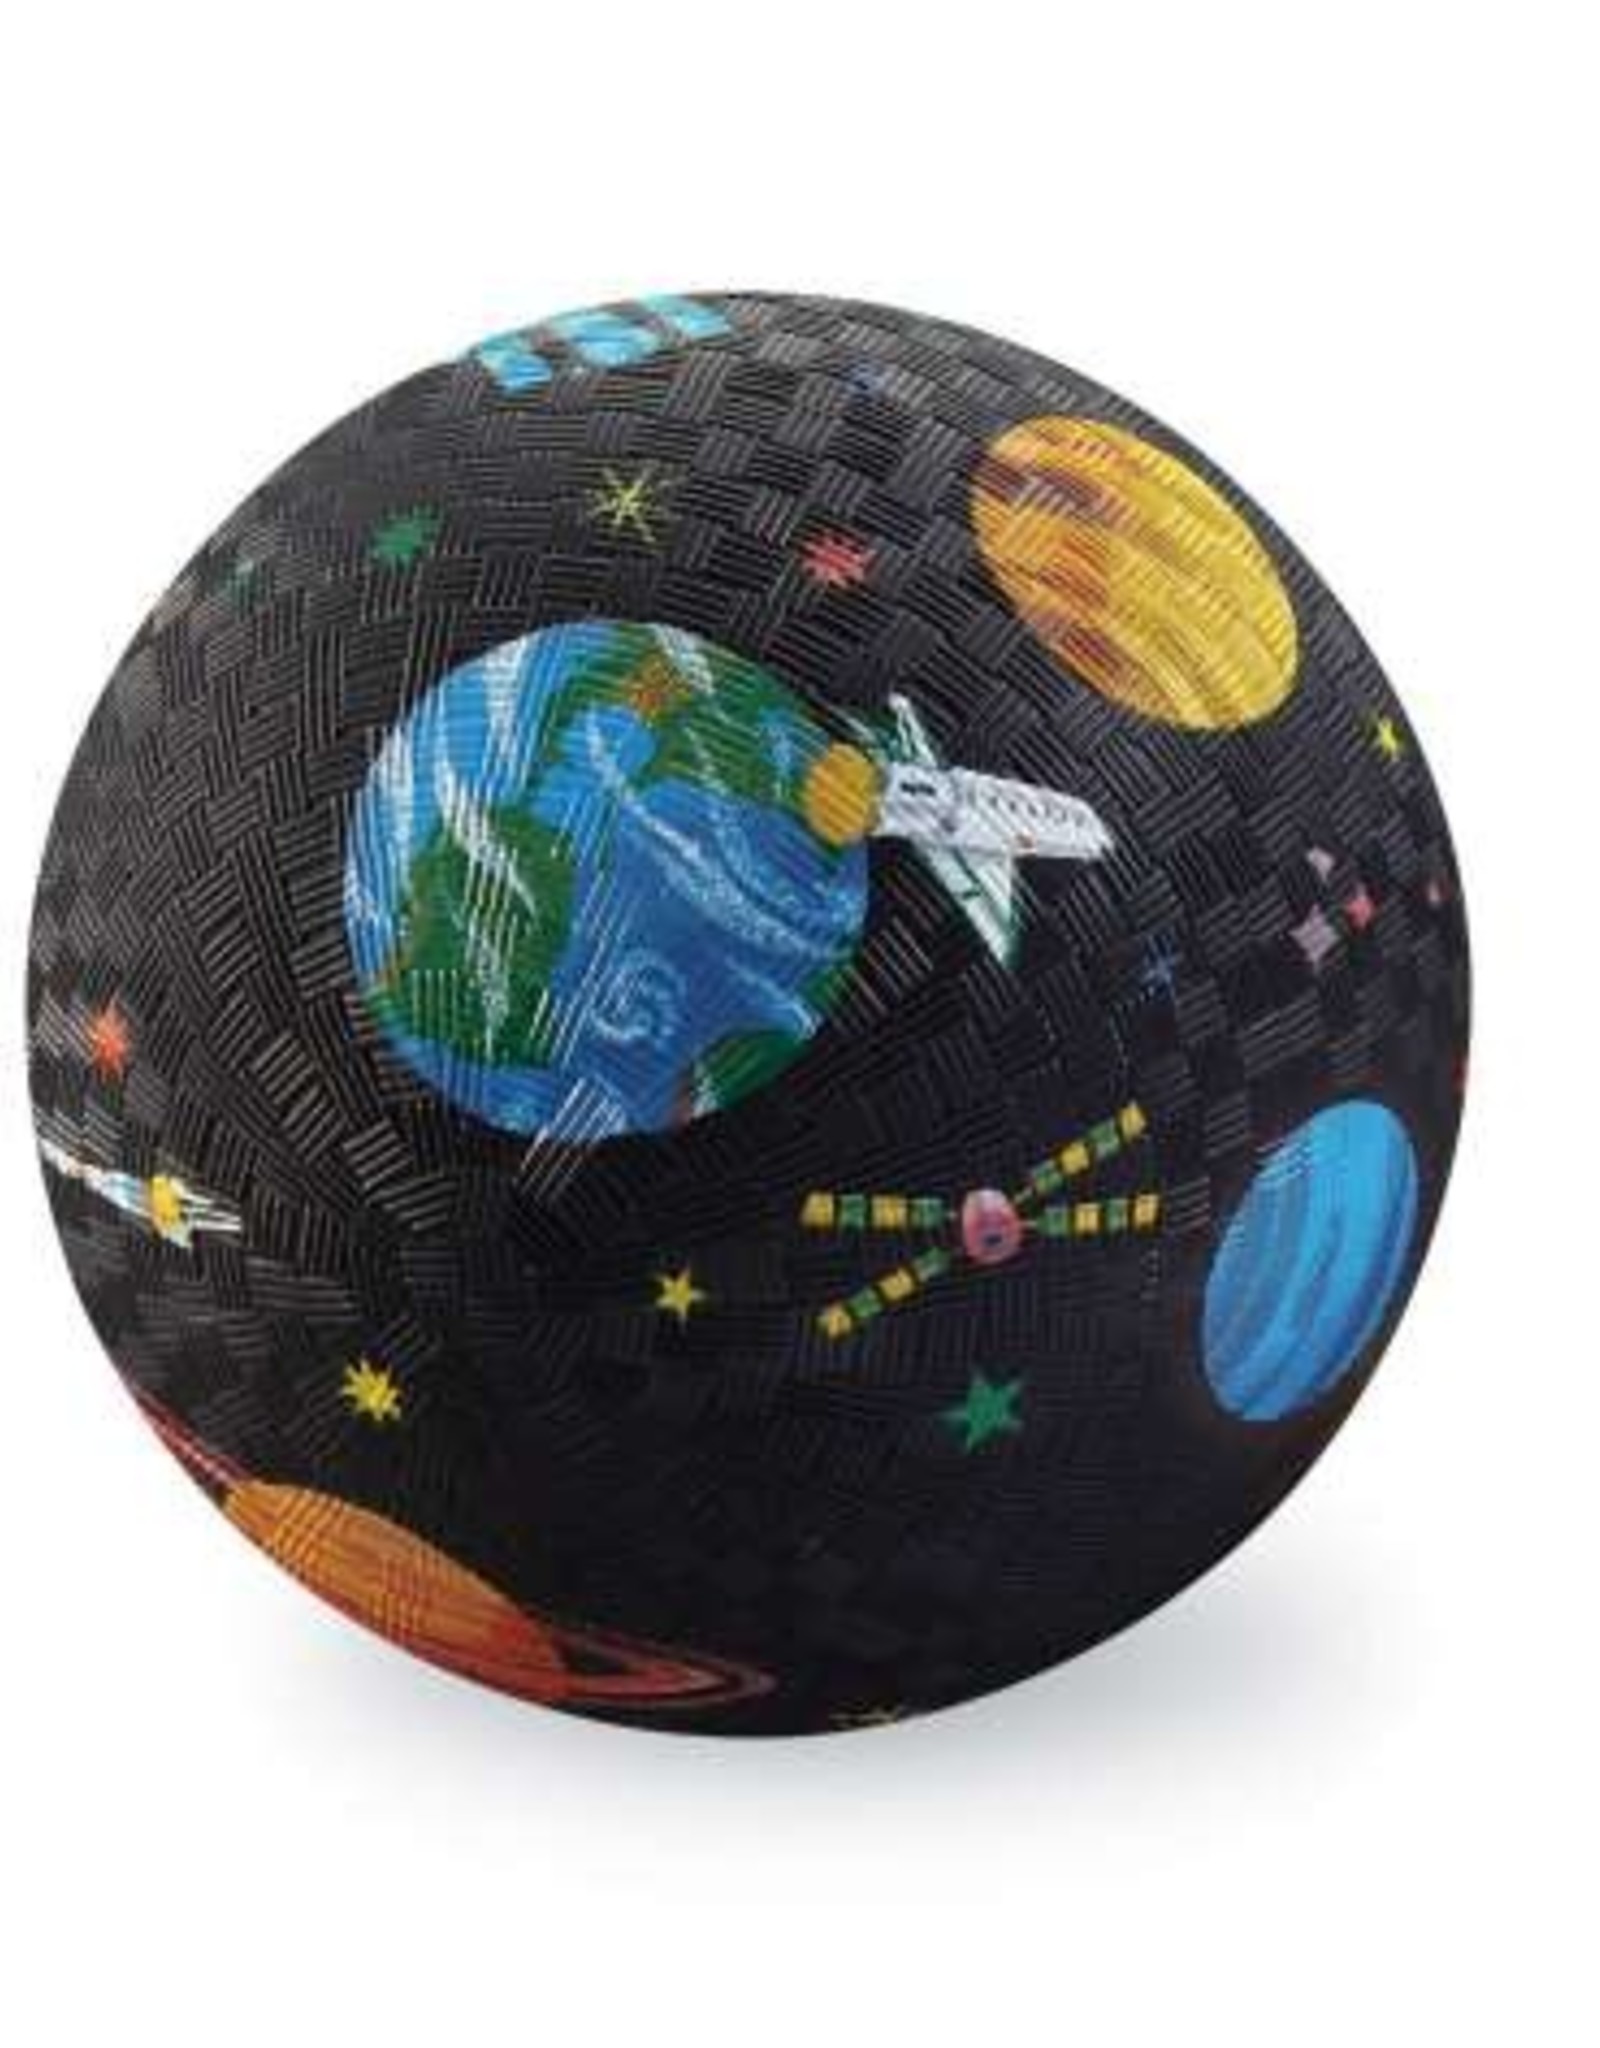 Crocodile Creek 5" Playground Ball -  Space Exploration